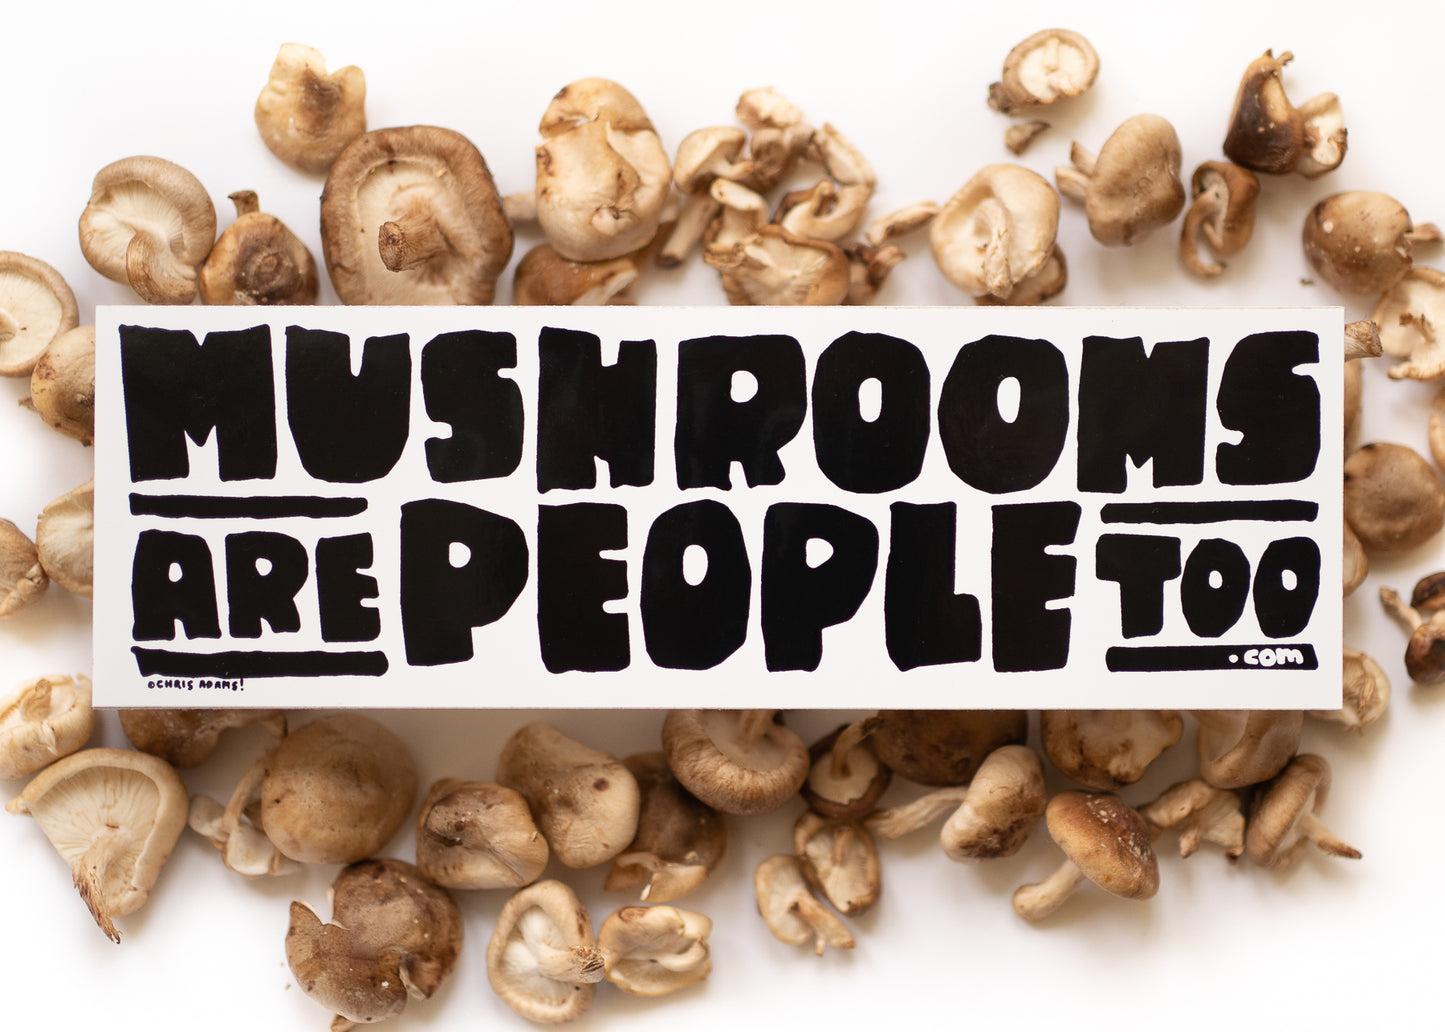 Mushrooms Are People Too Bumper Sticker